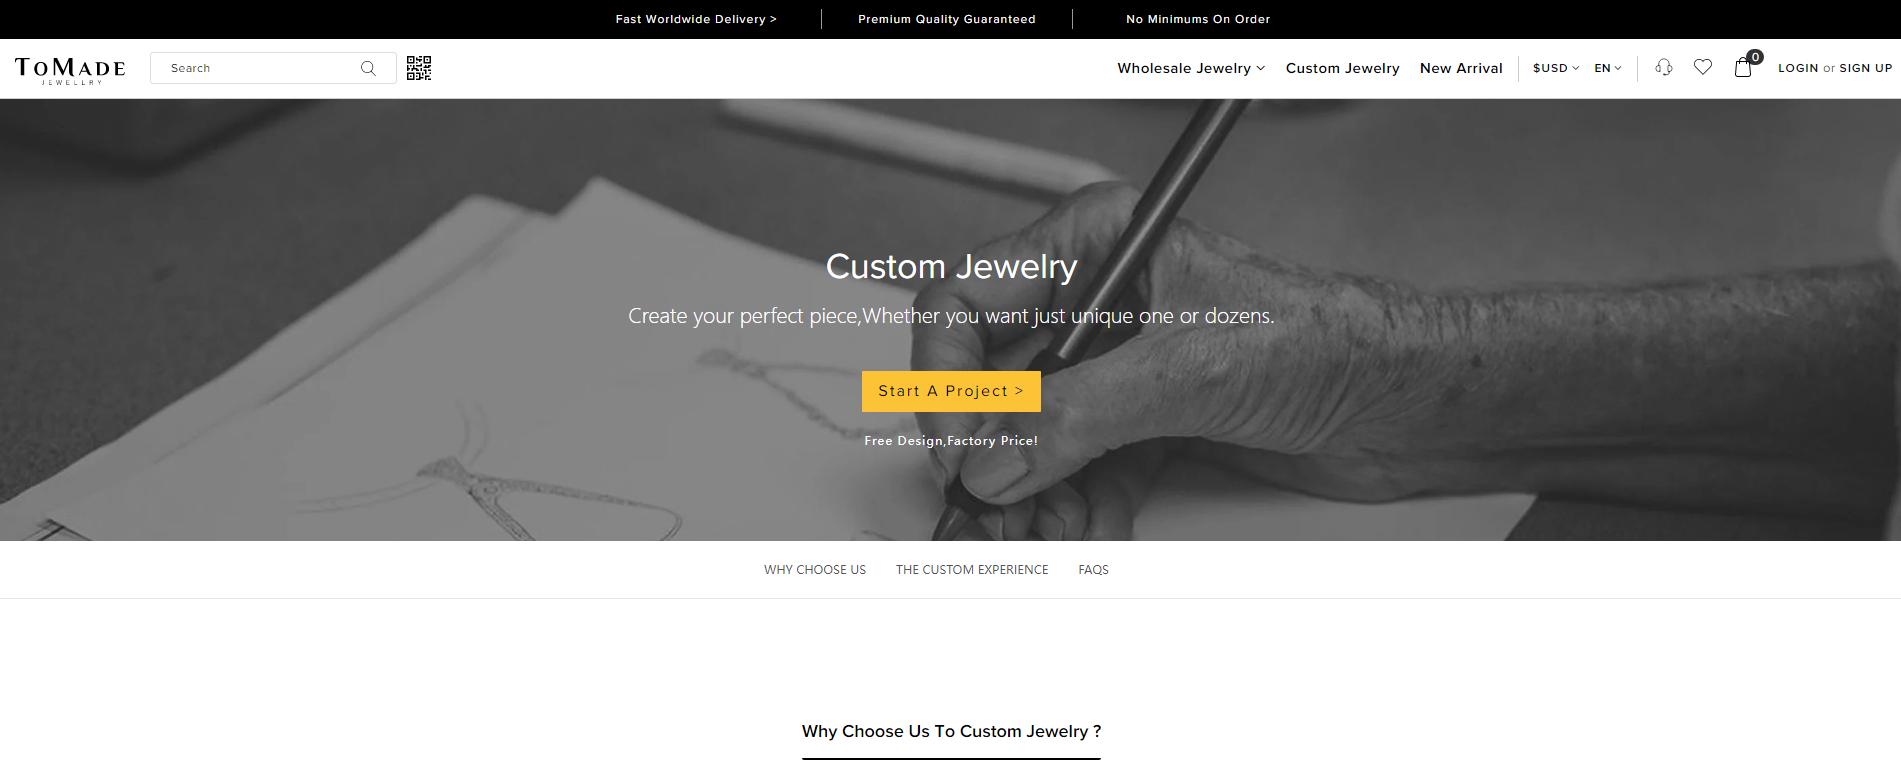 tomade custom jewelry wholesale